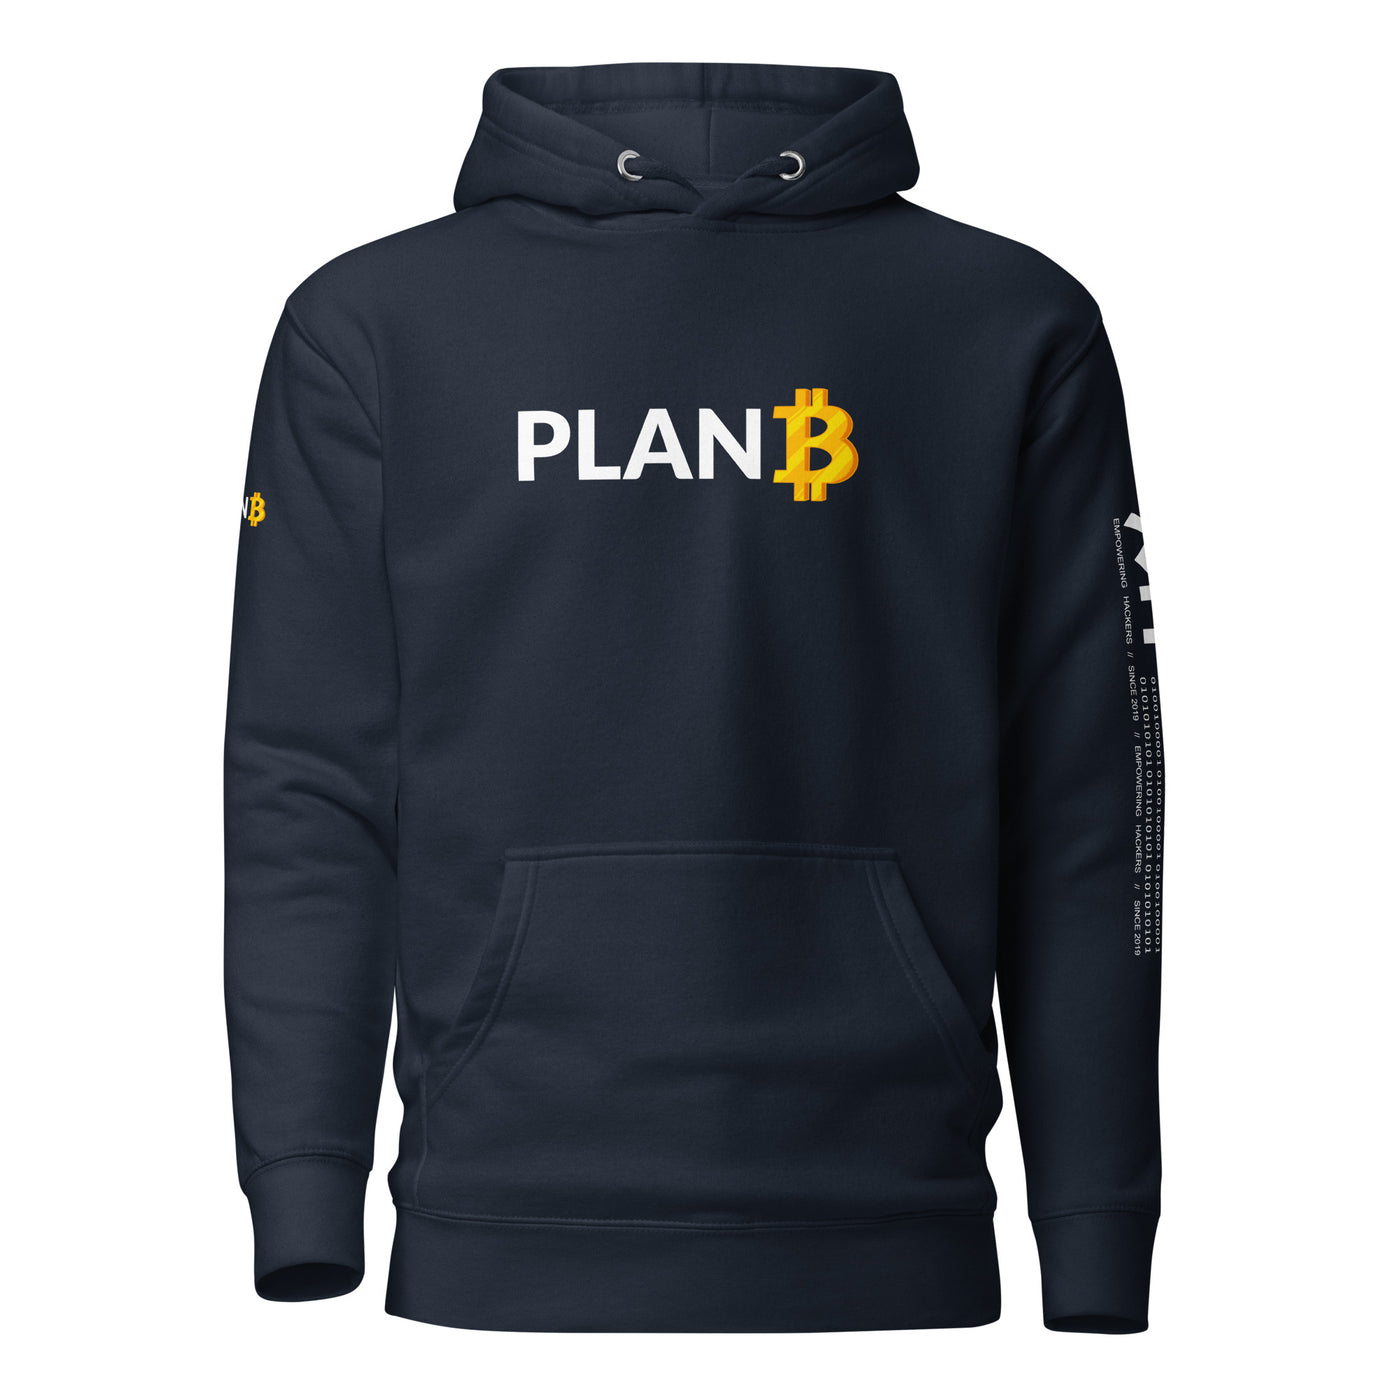 Plan Bitcoin V1 - Unisex Hoodie